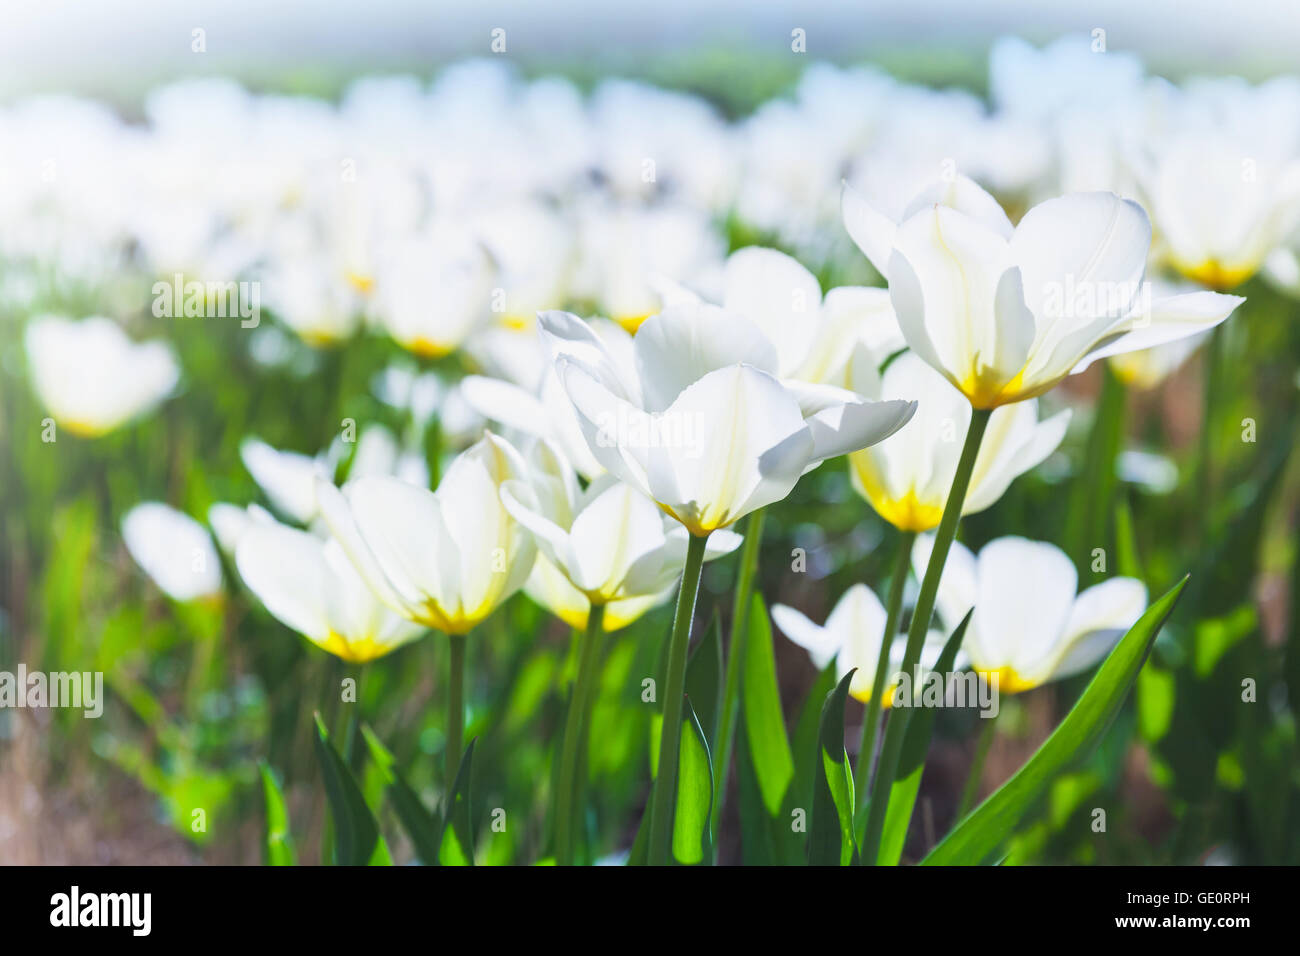 Weiße Tulpe Blumen im Frühling Garten, Nahaufnahme Foto mit selektiven Fokus Stockfoto